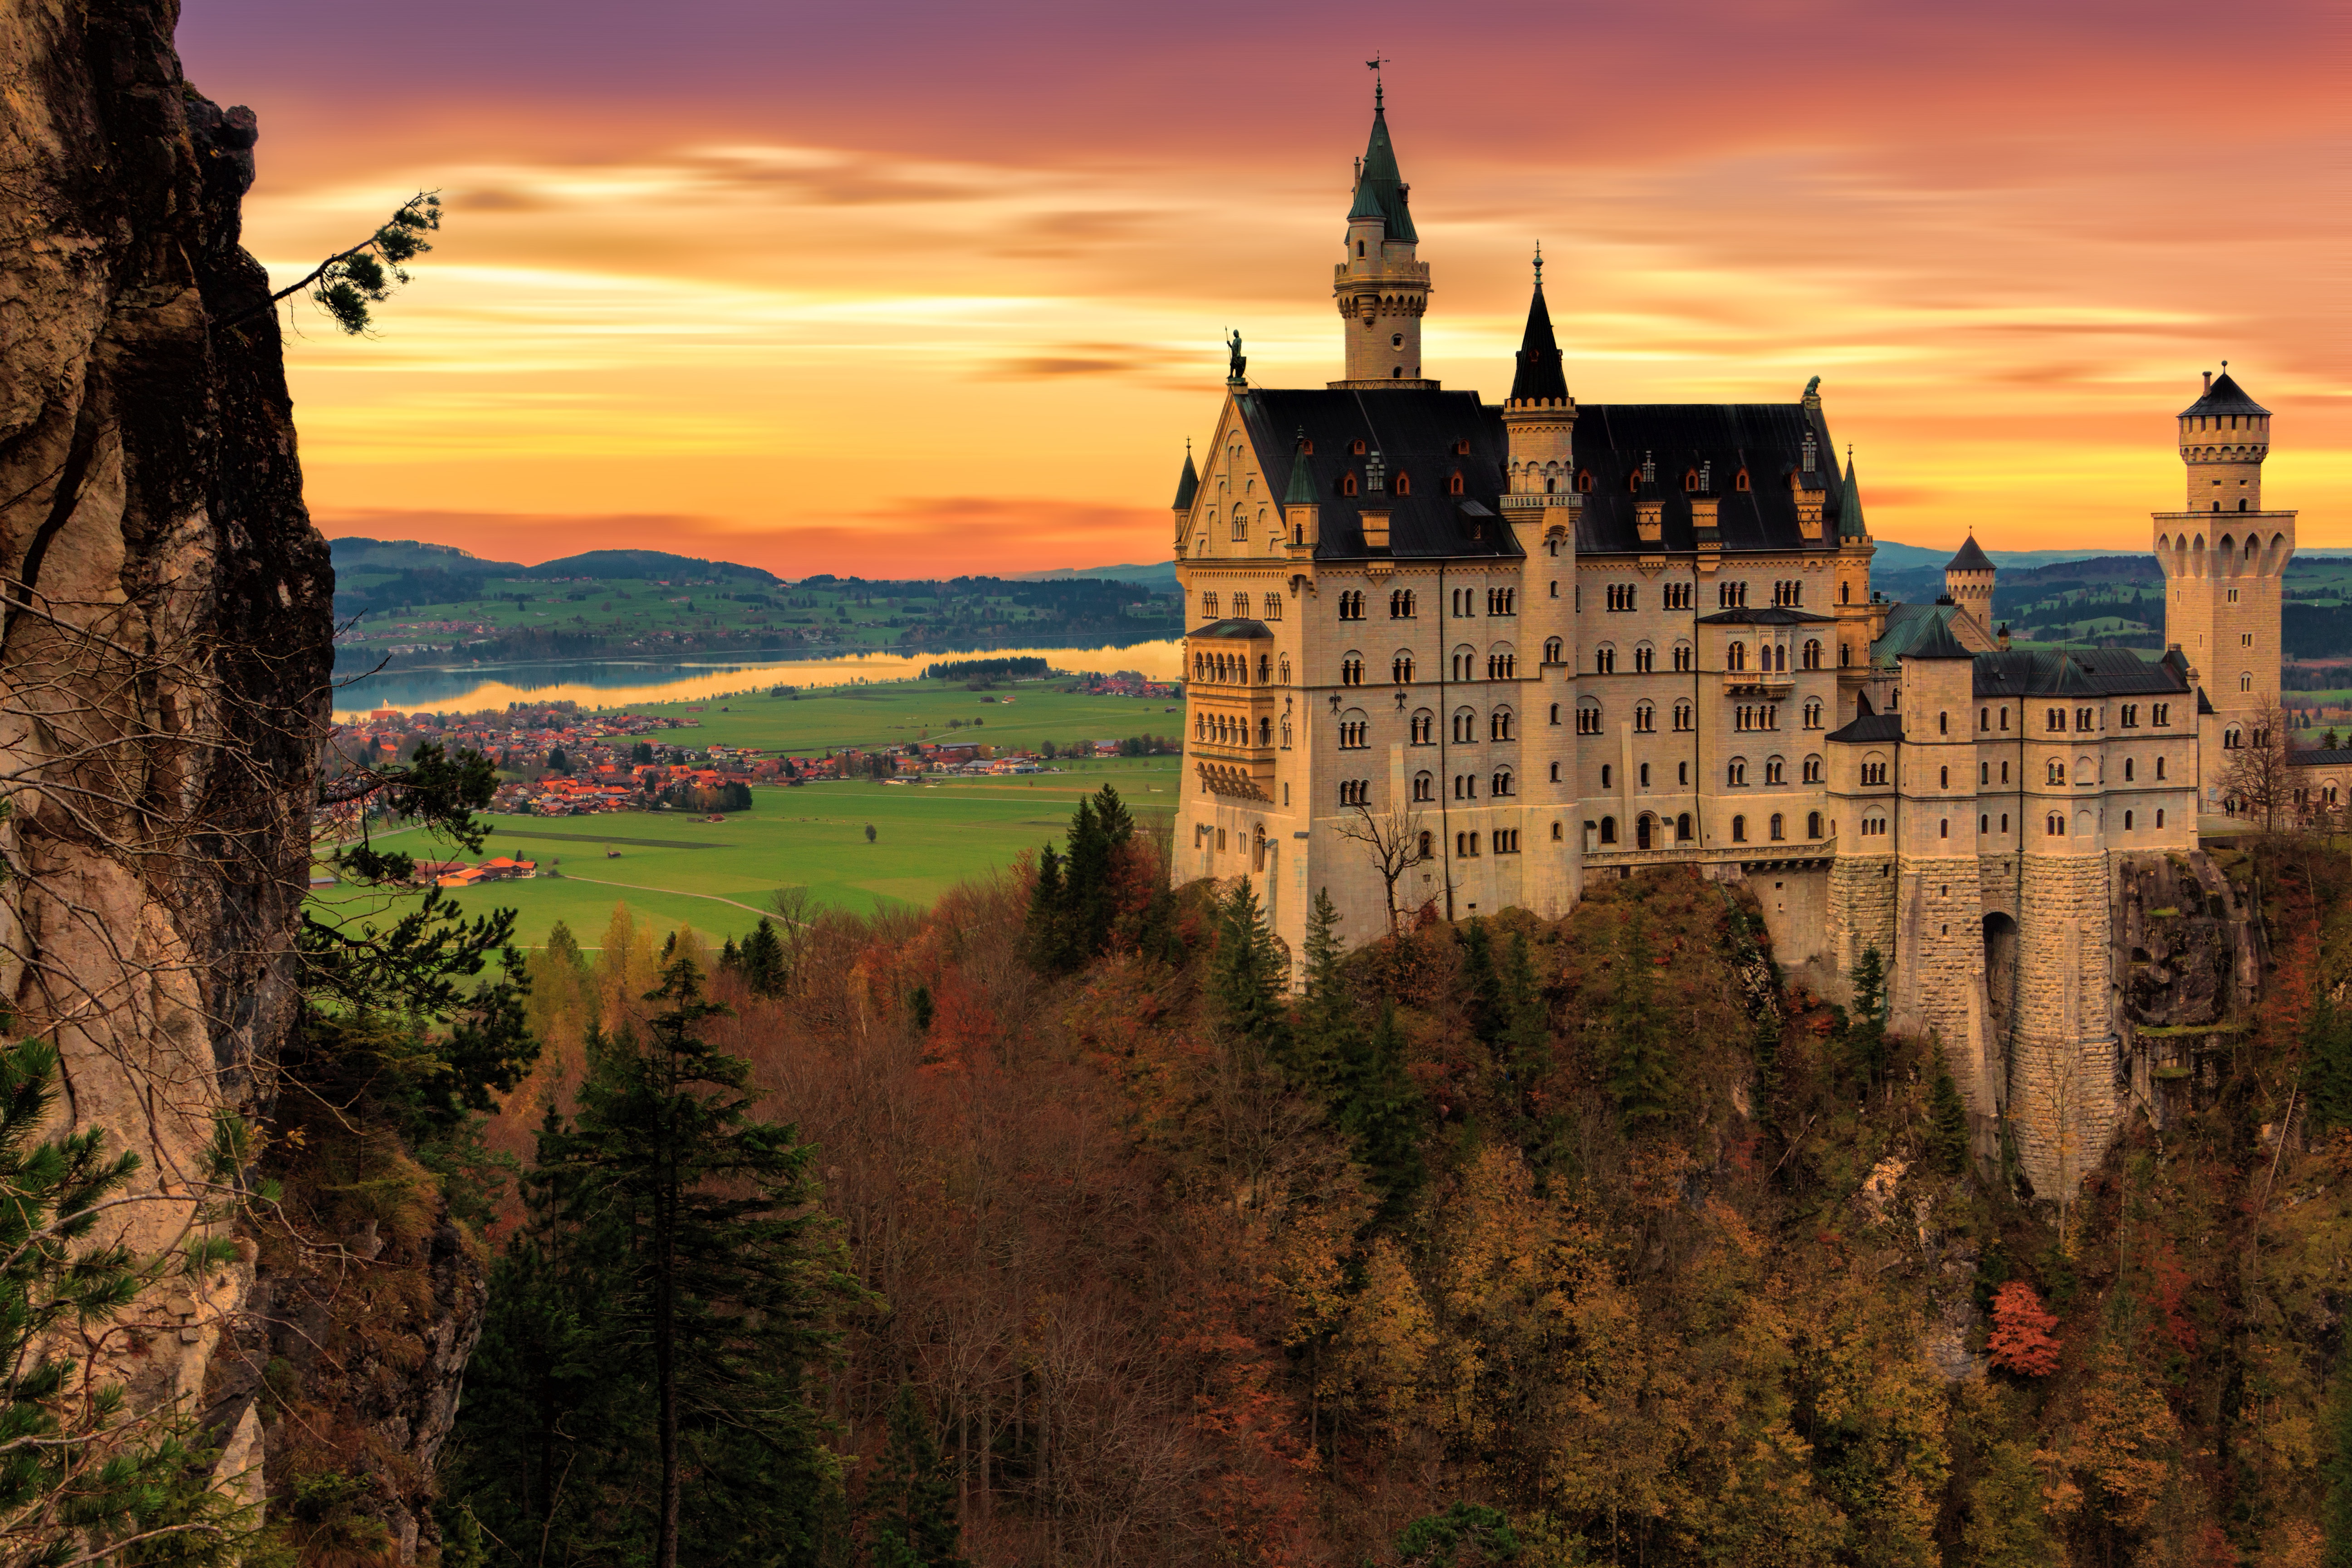 General 5184x3456 Neuschwanstein Castle sunset architecture castle trees landmark Germany Europe